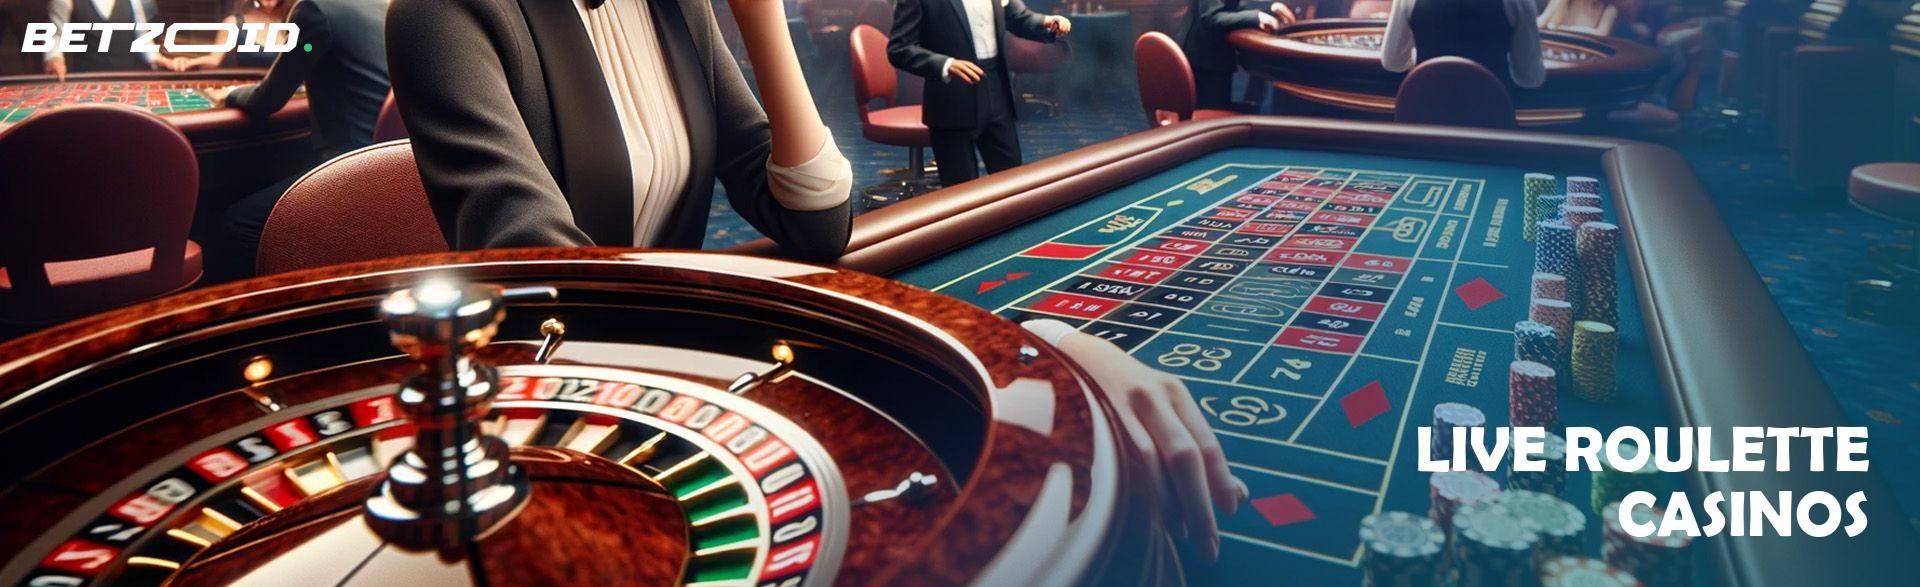 Live Roulette Casinos.